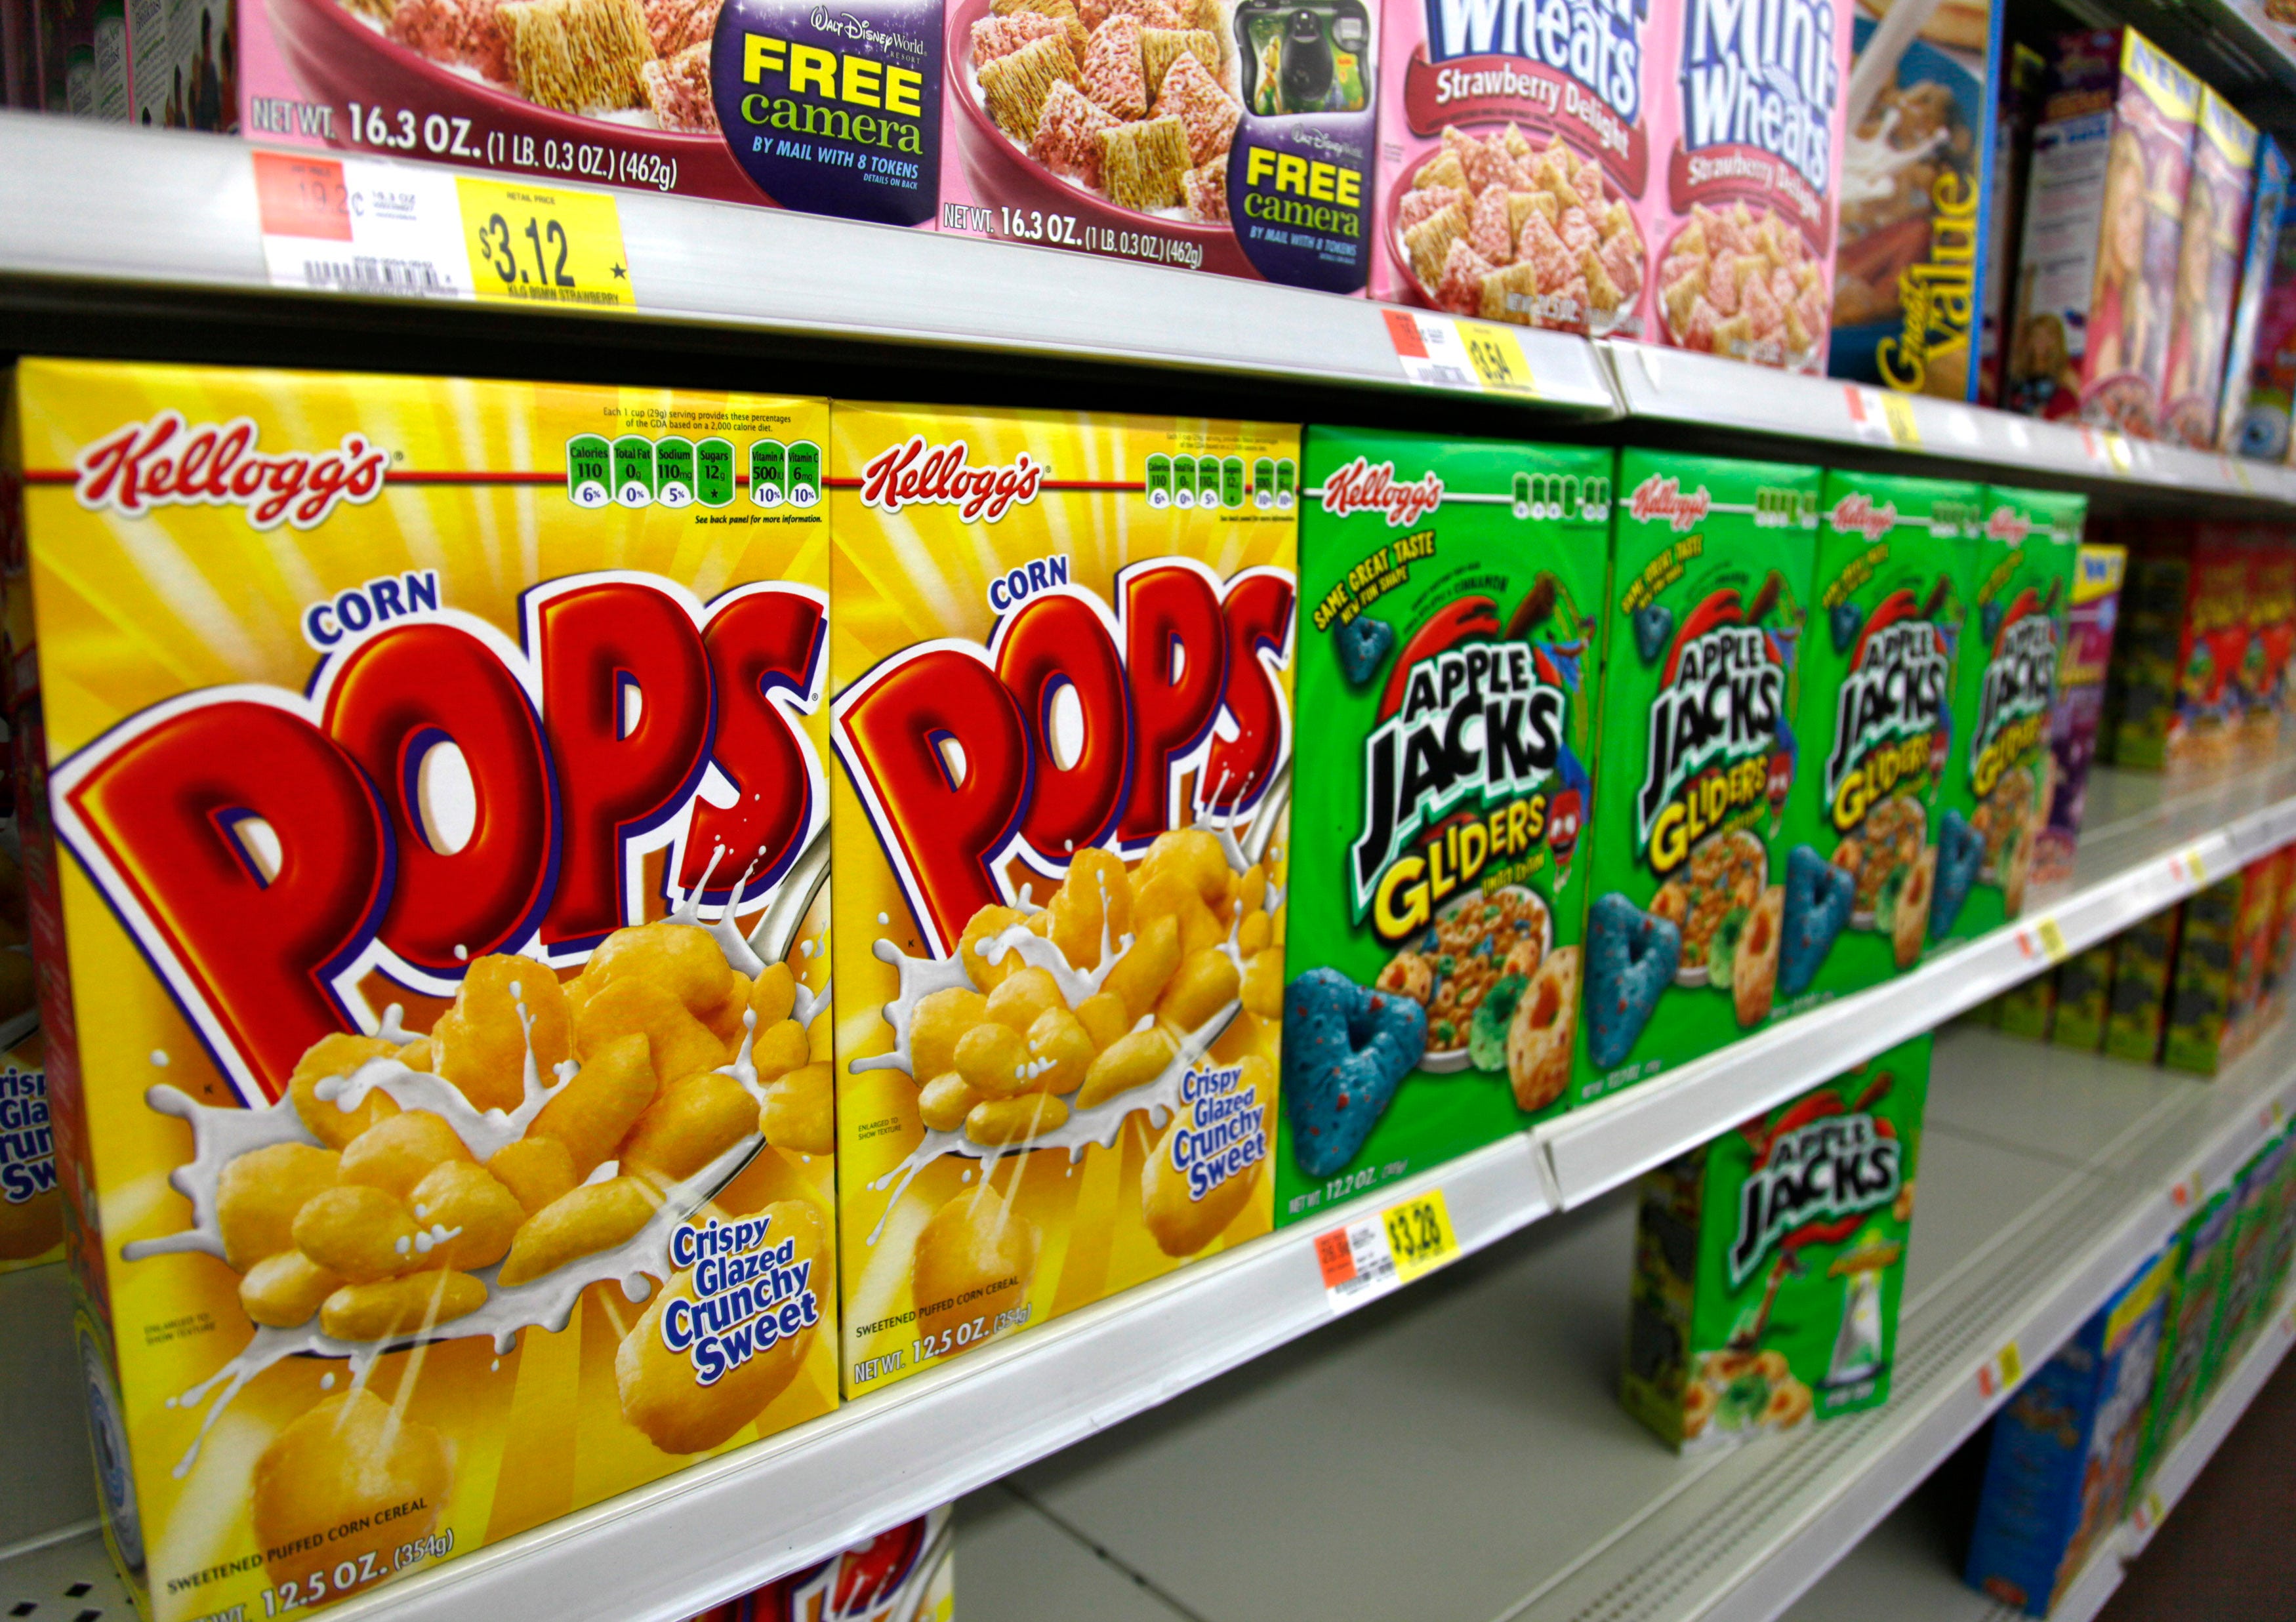 Nākd expands into cereal aisle - FoodBev Media